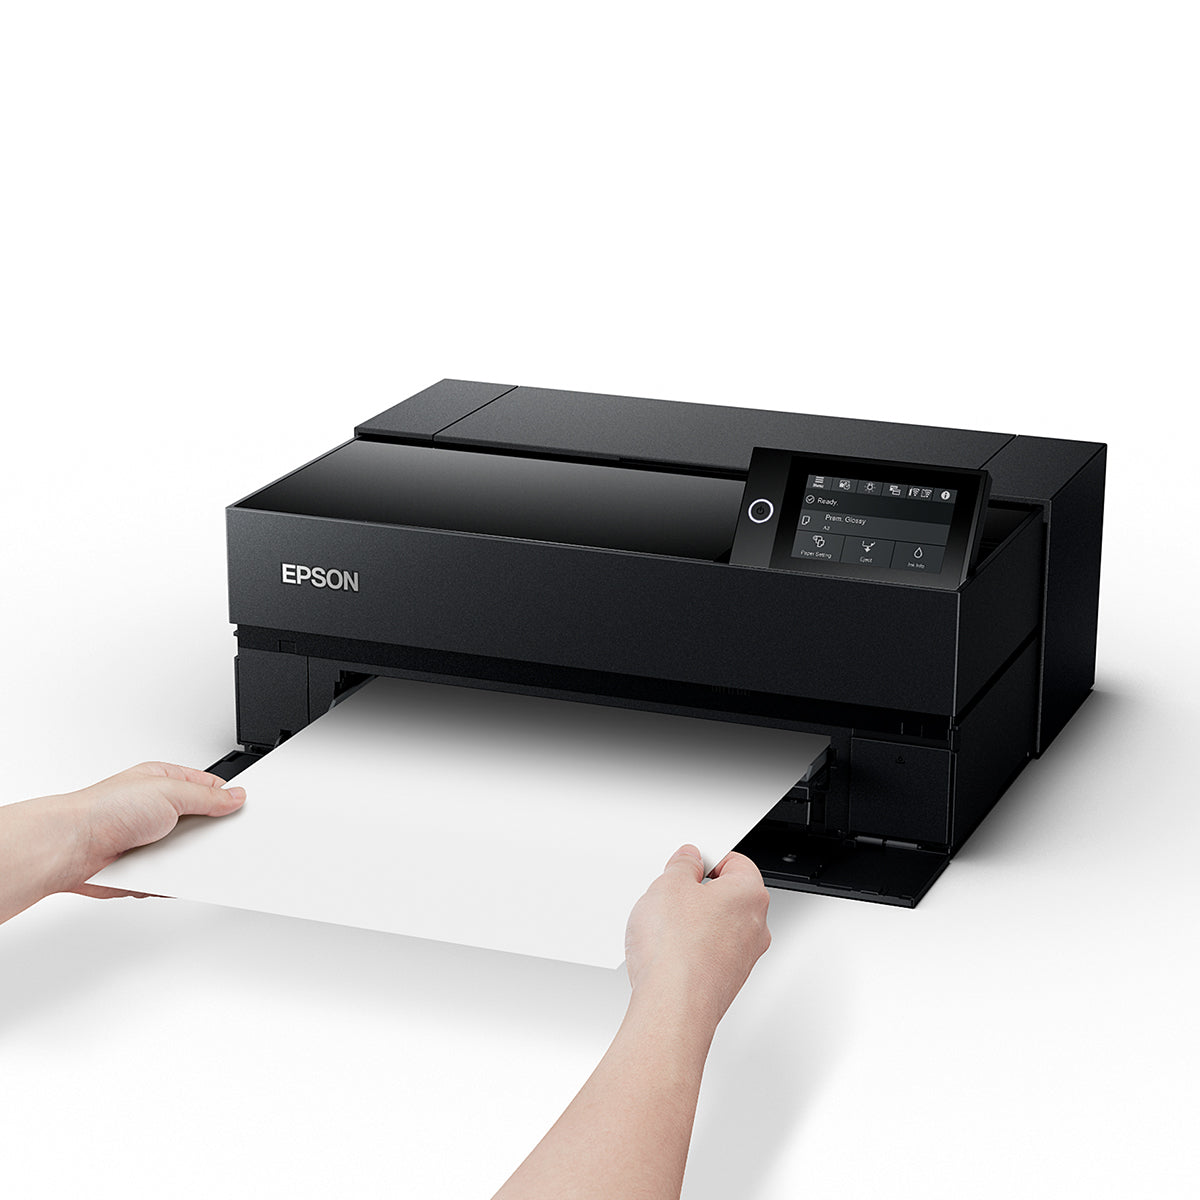 Epson SureColor P700 Printer